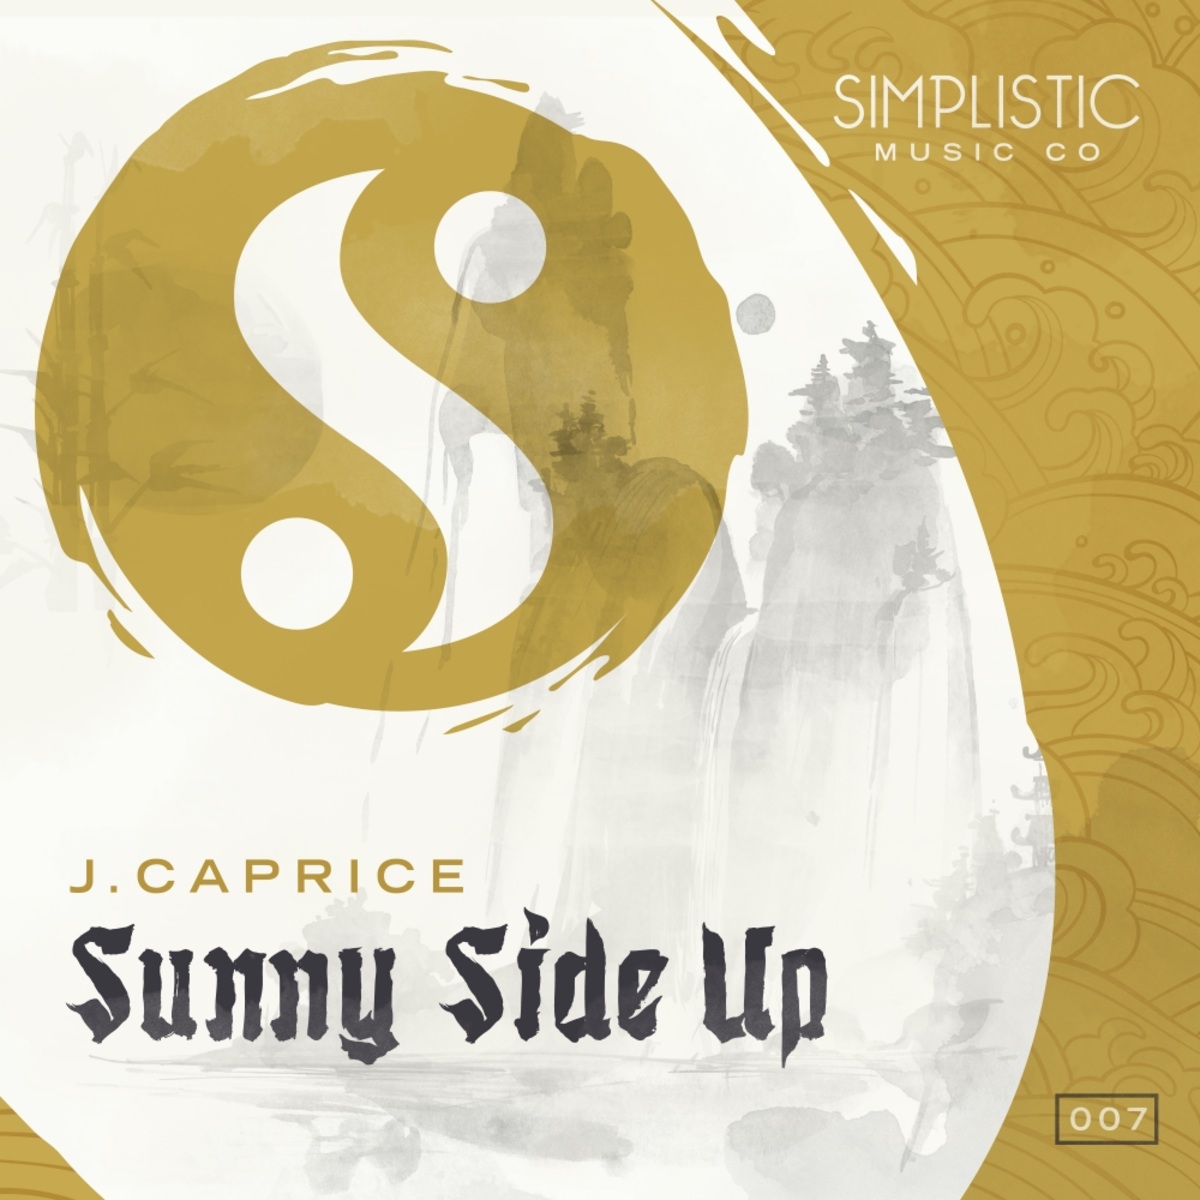 J.Caprice - Sunny Side Up / Simplistic Music Company